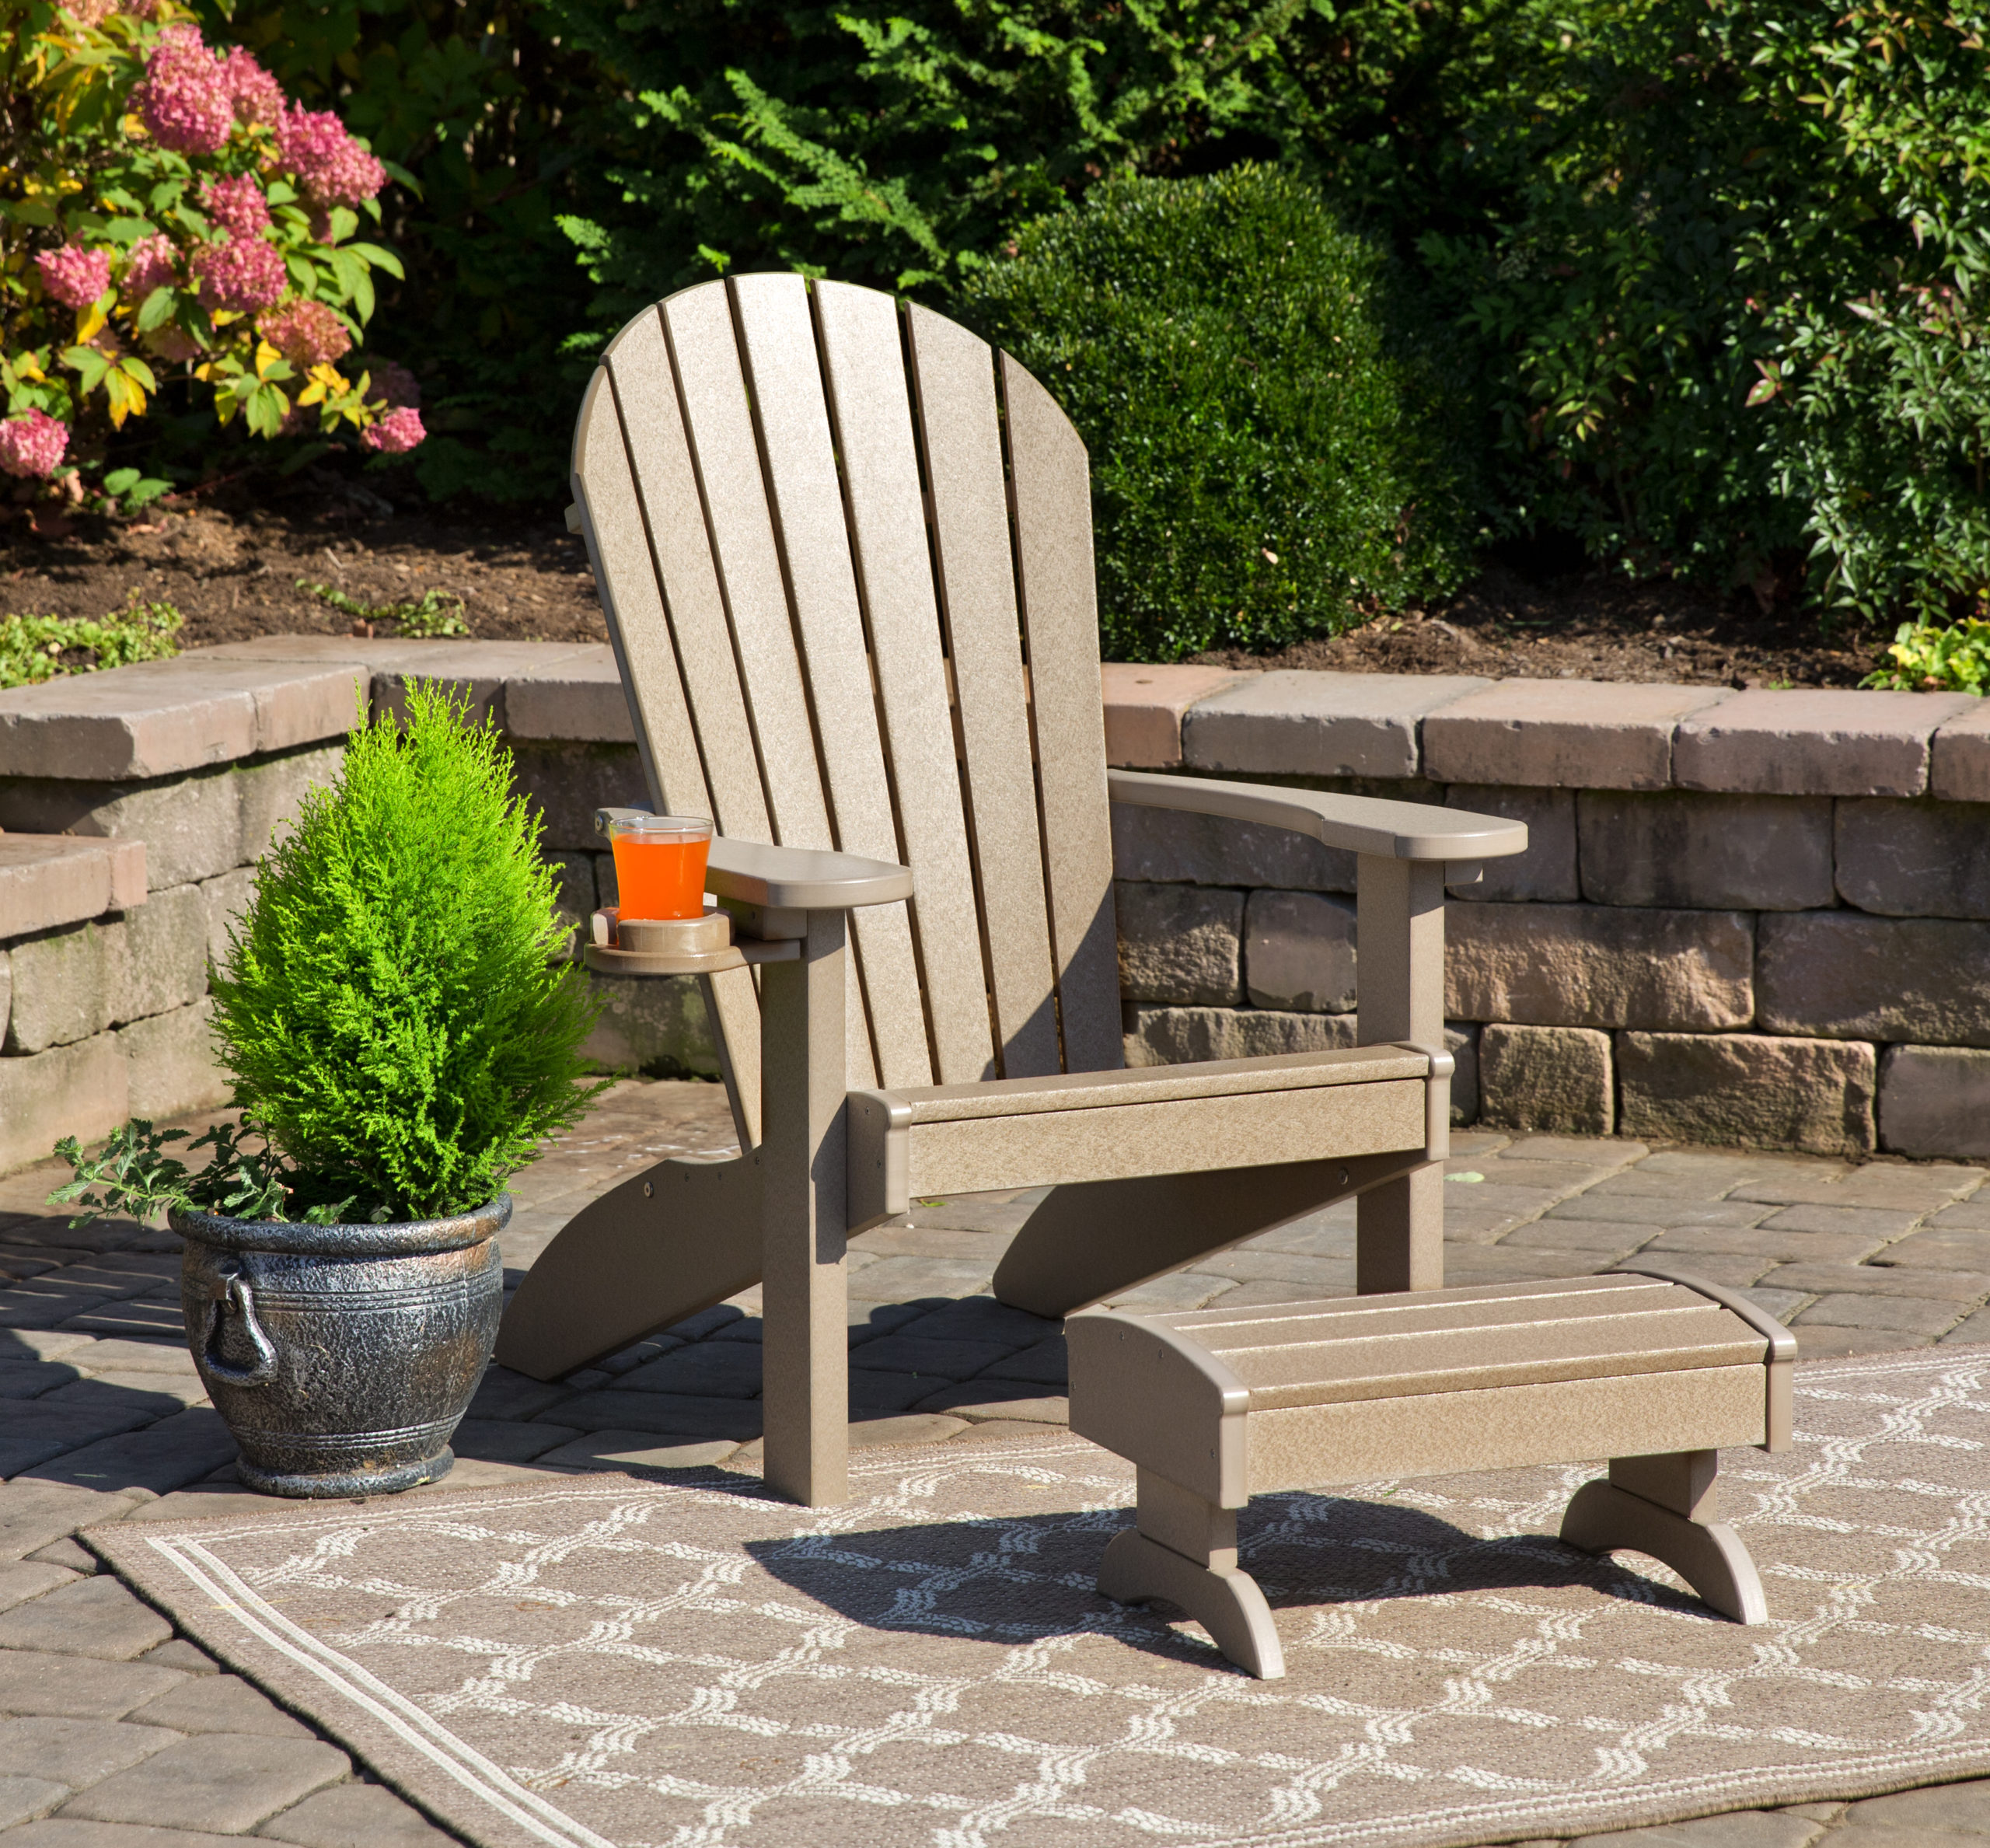 Weathered poly wood classic Adirondack chair set.